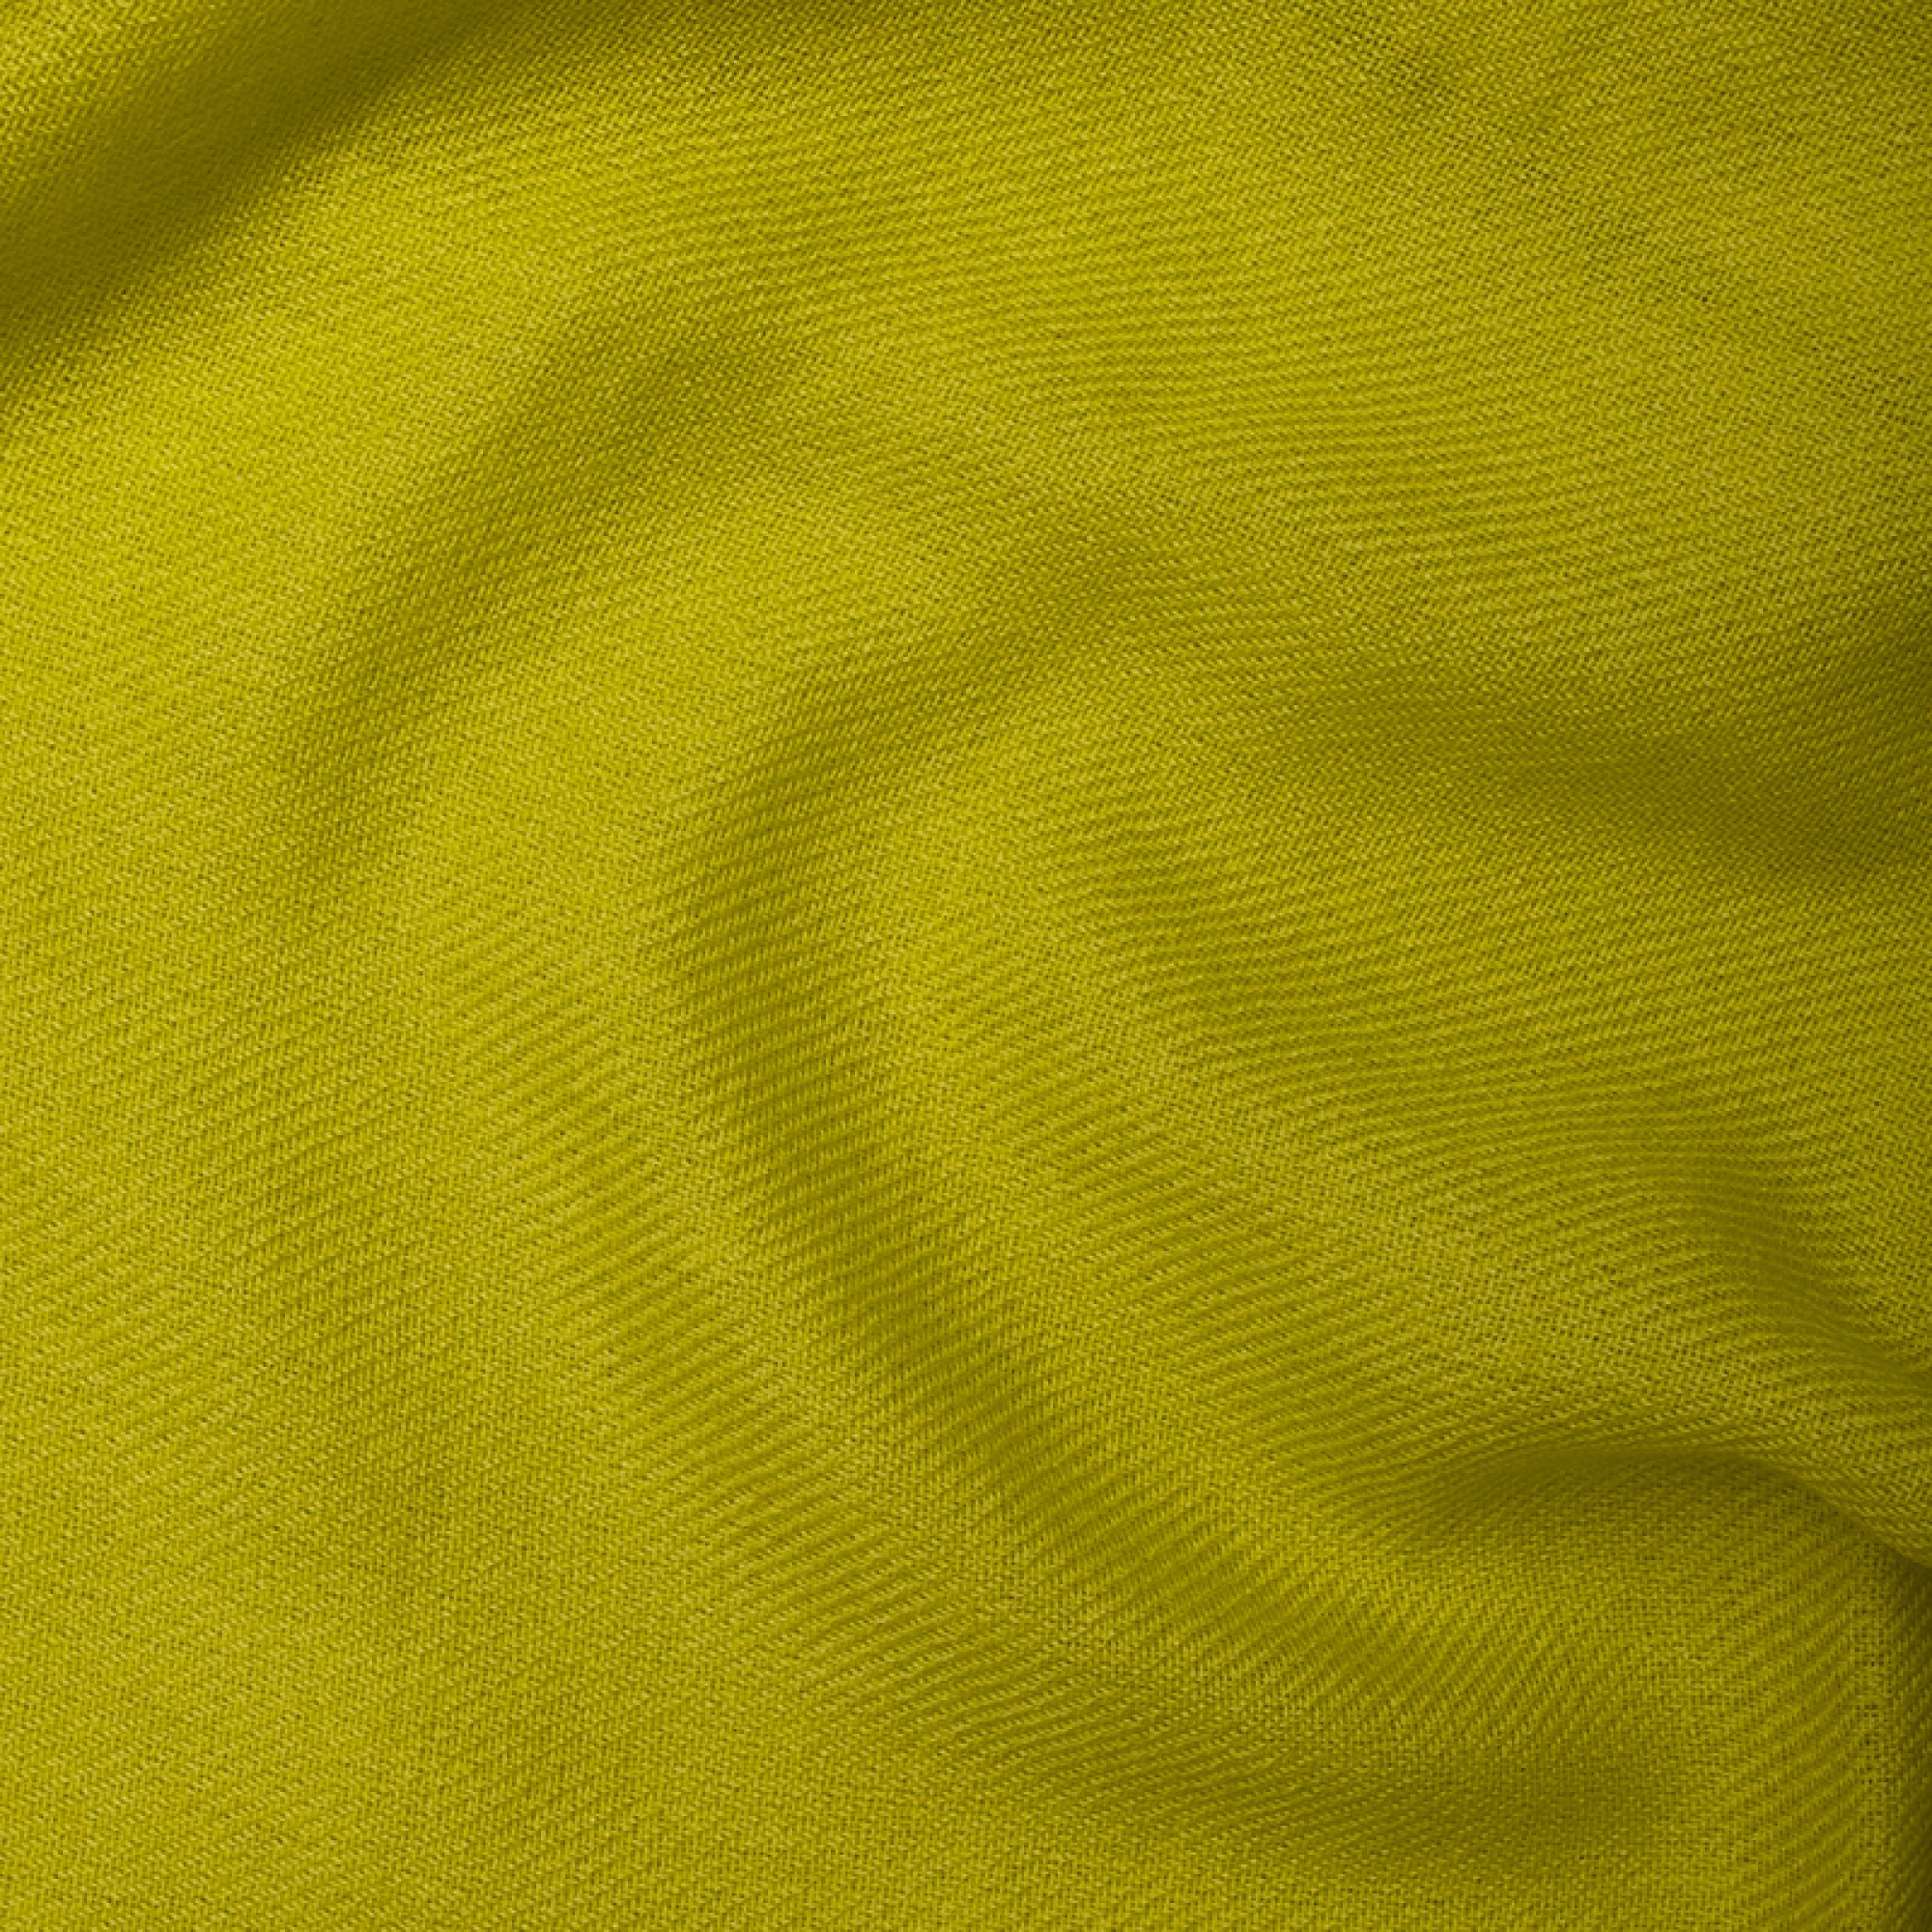 Cashmere accessories blanket toodoo plain m 180 x 220 sulphur spring 180 x 220 cm